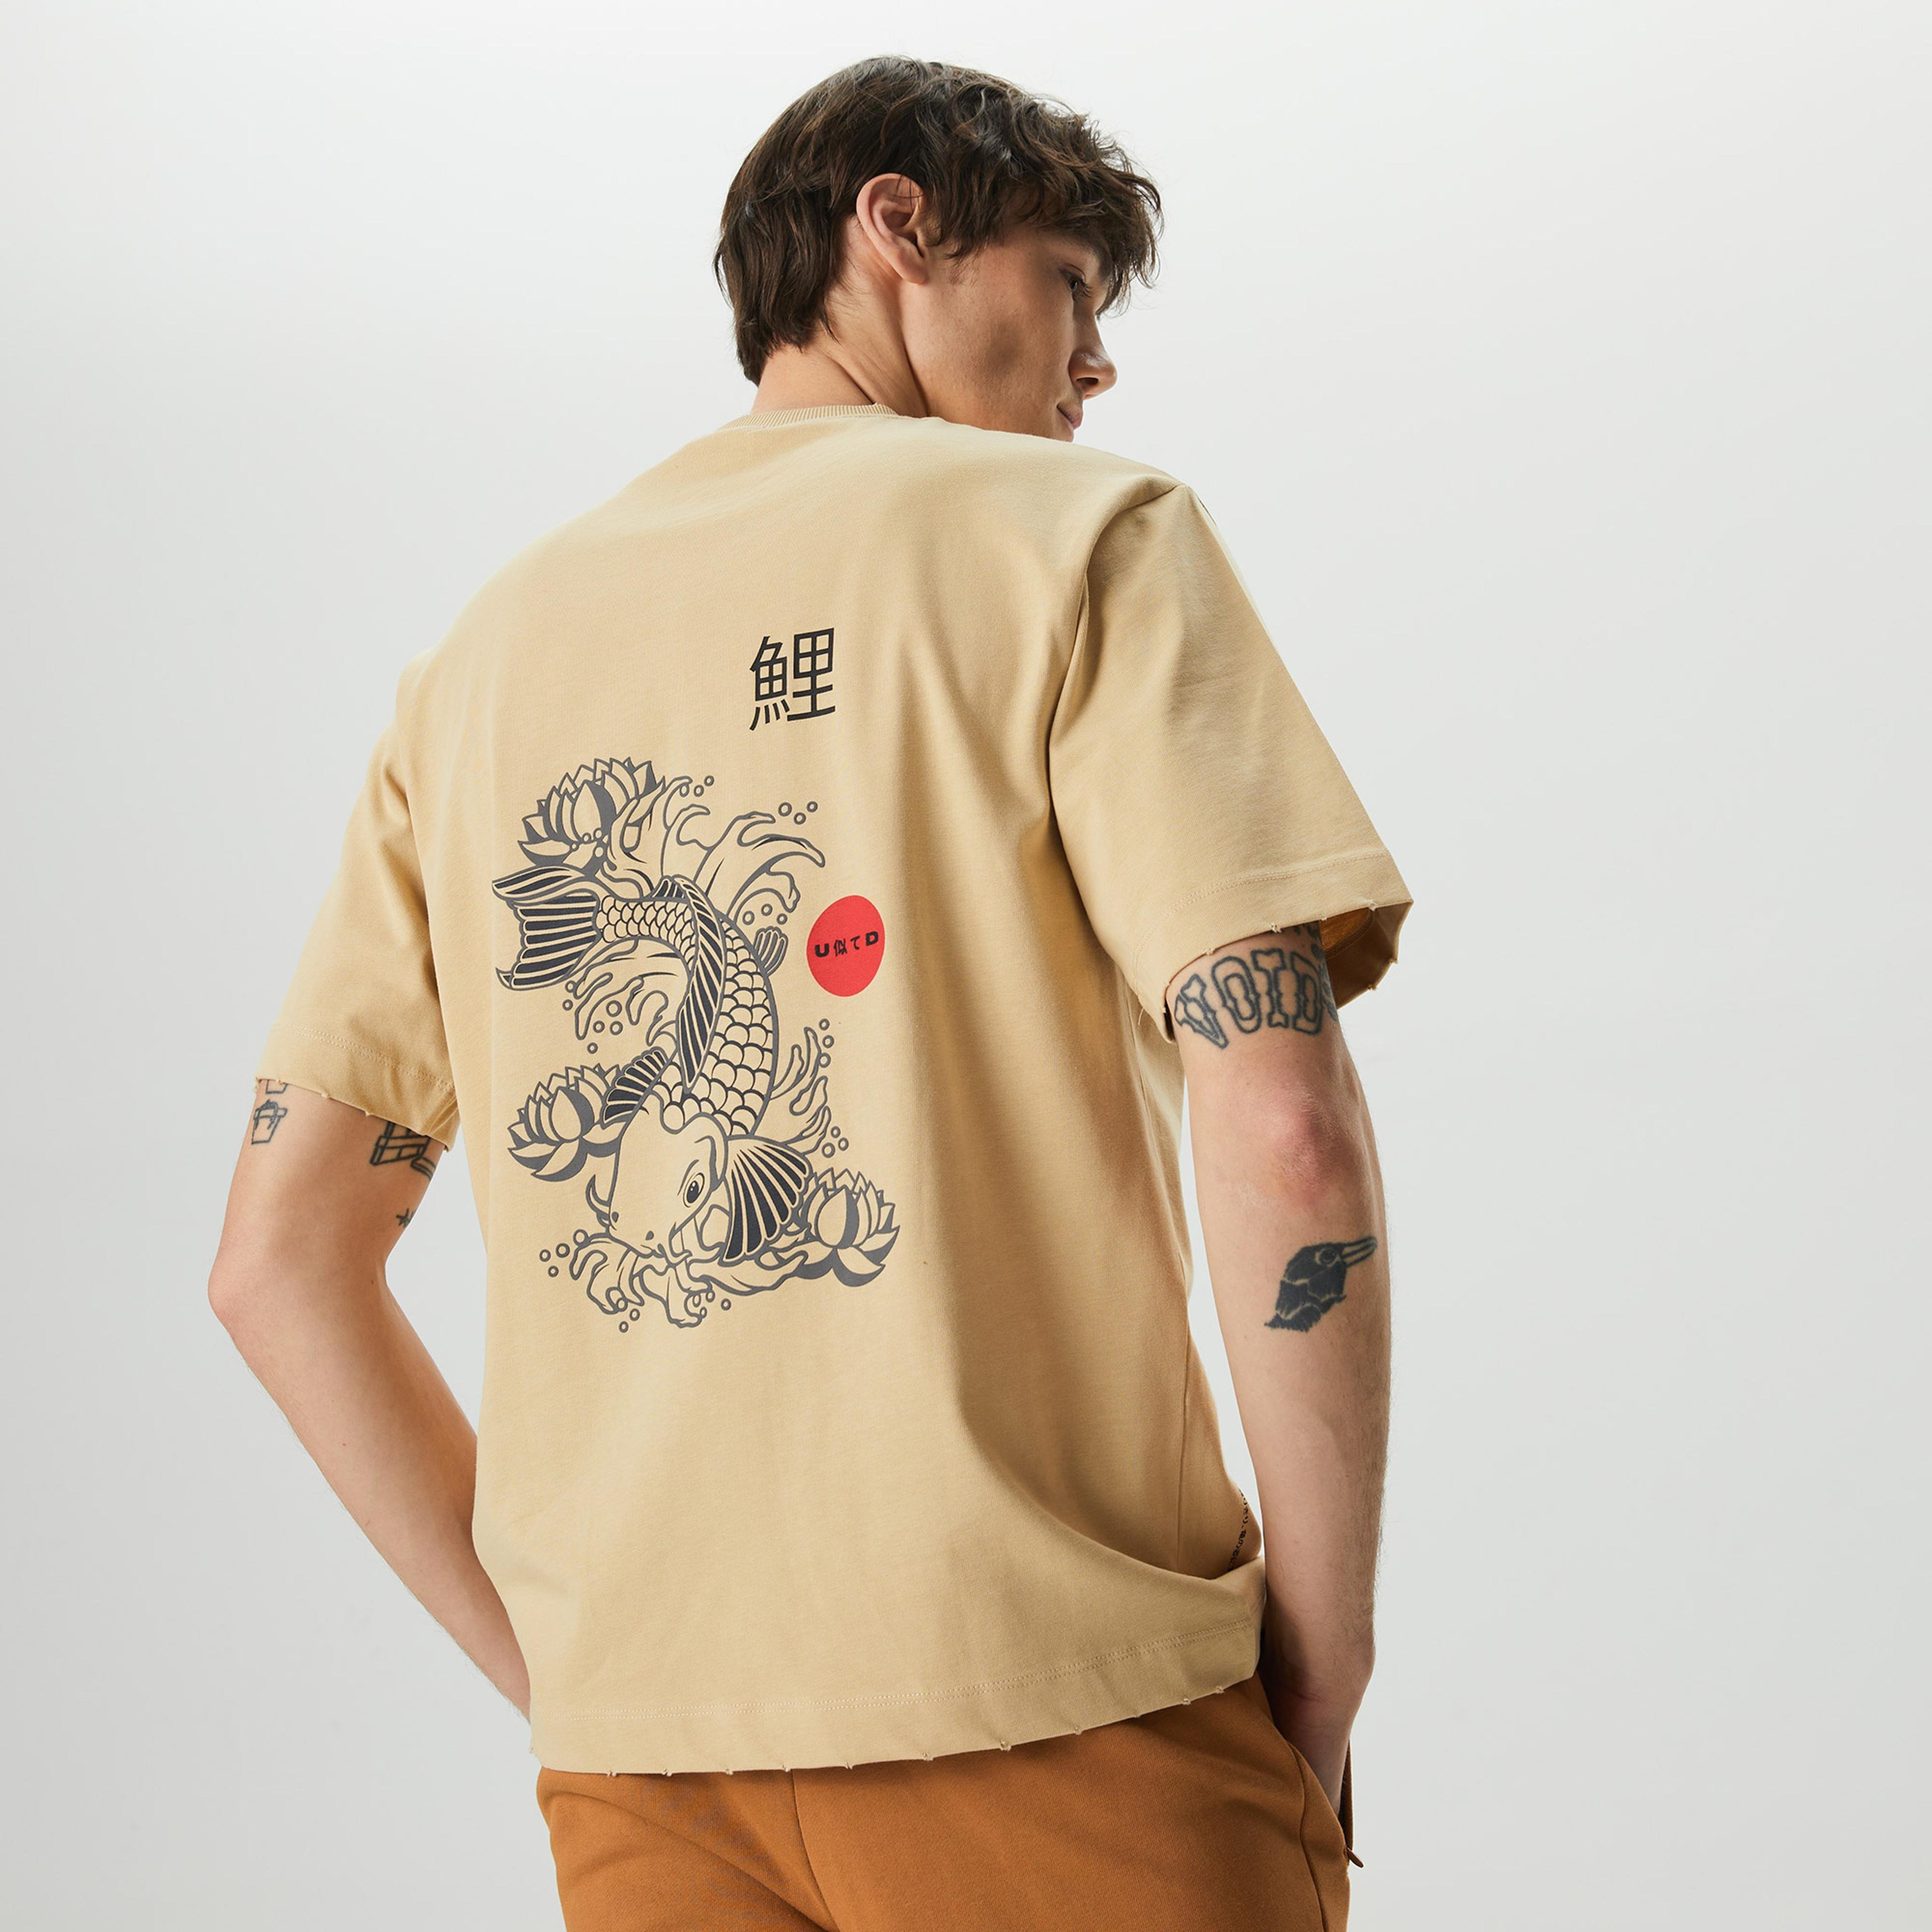 UNITED4 Classic Erkek Kahverengi T-Shirt